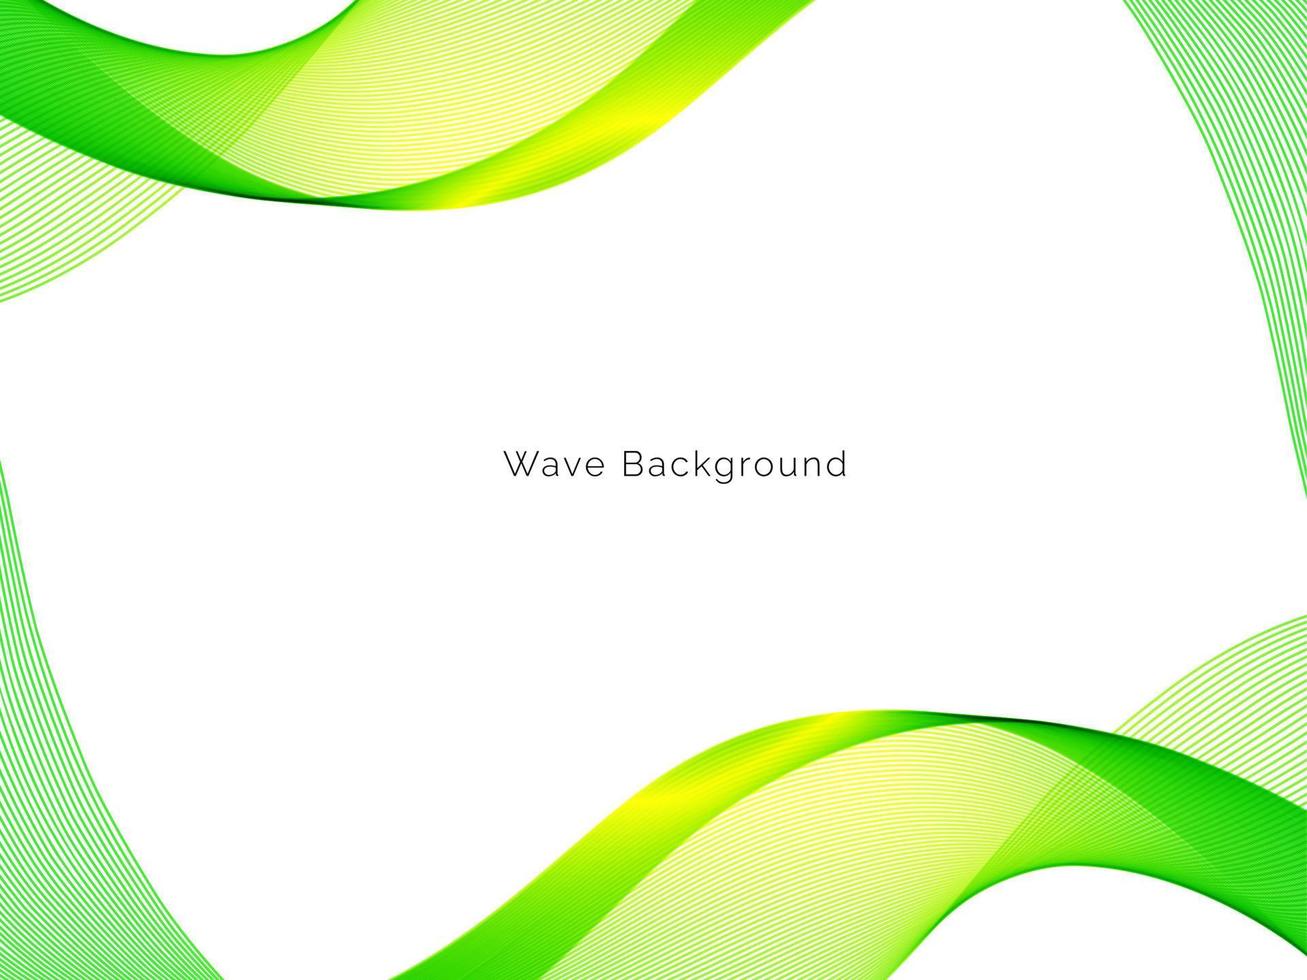 fondo de onda moderna verde suave abstracto vector